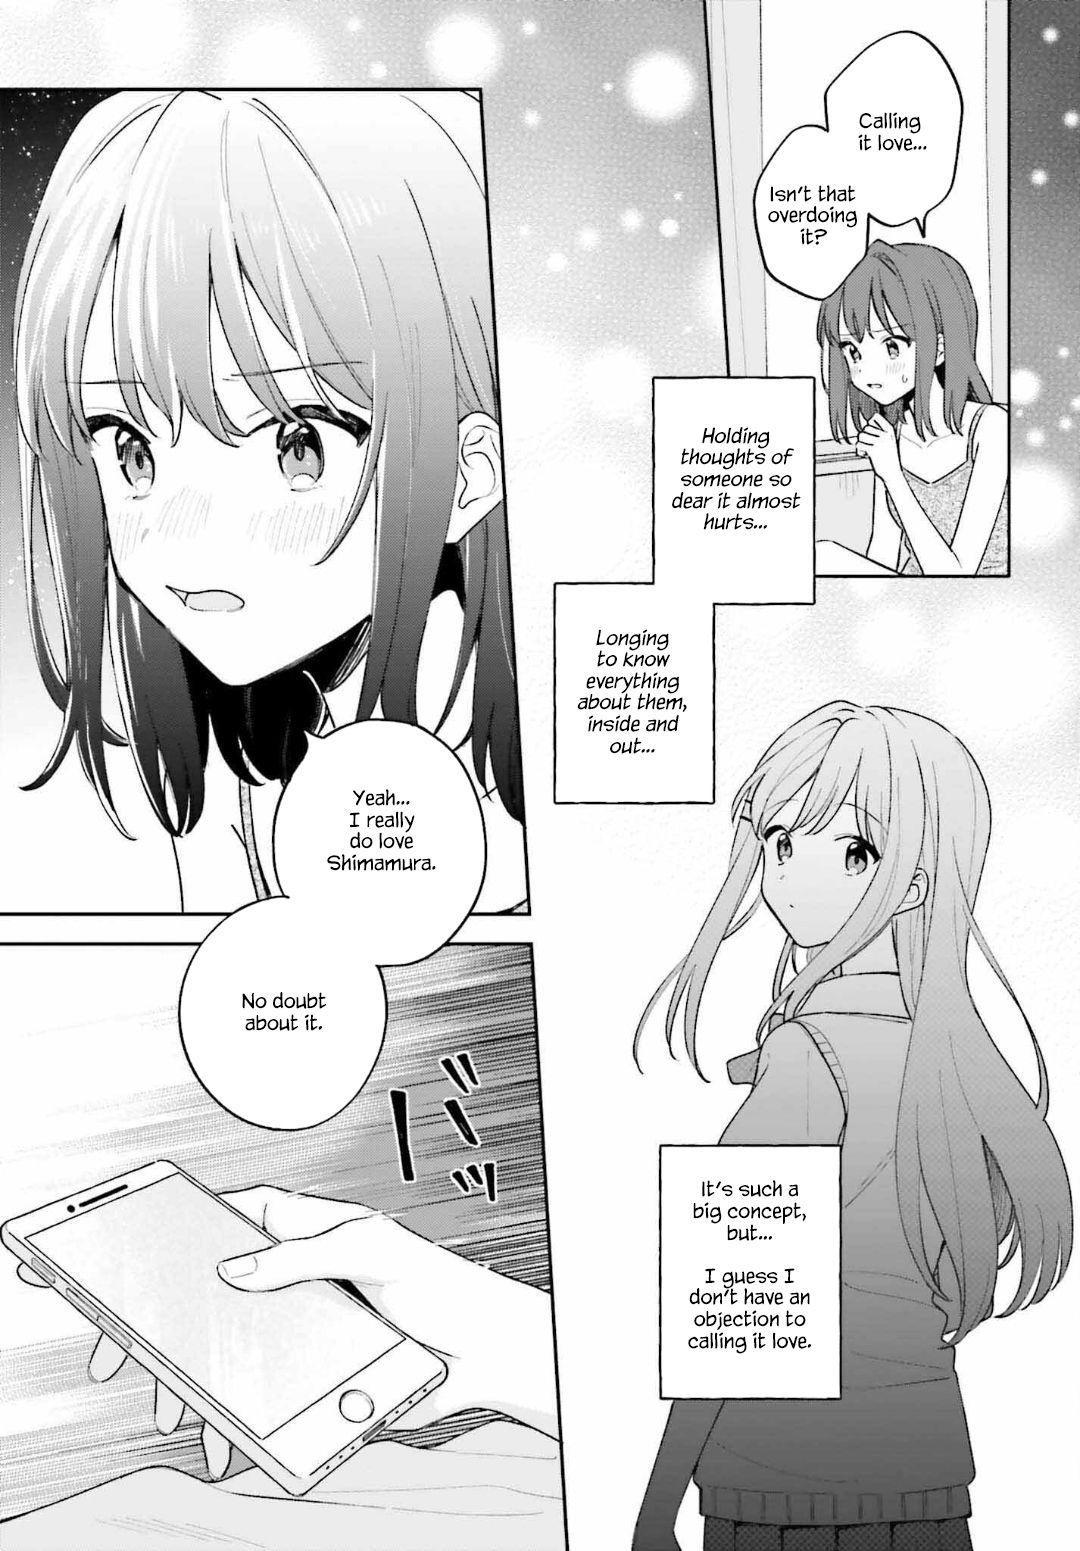 Adachi and Shimamura, Vol. 4 (Manga)